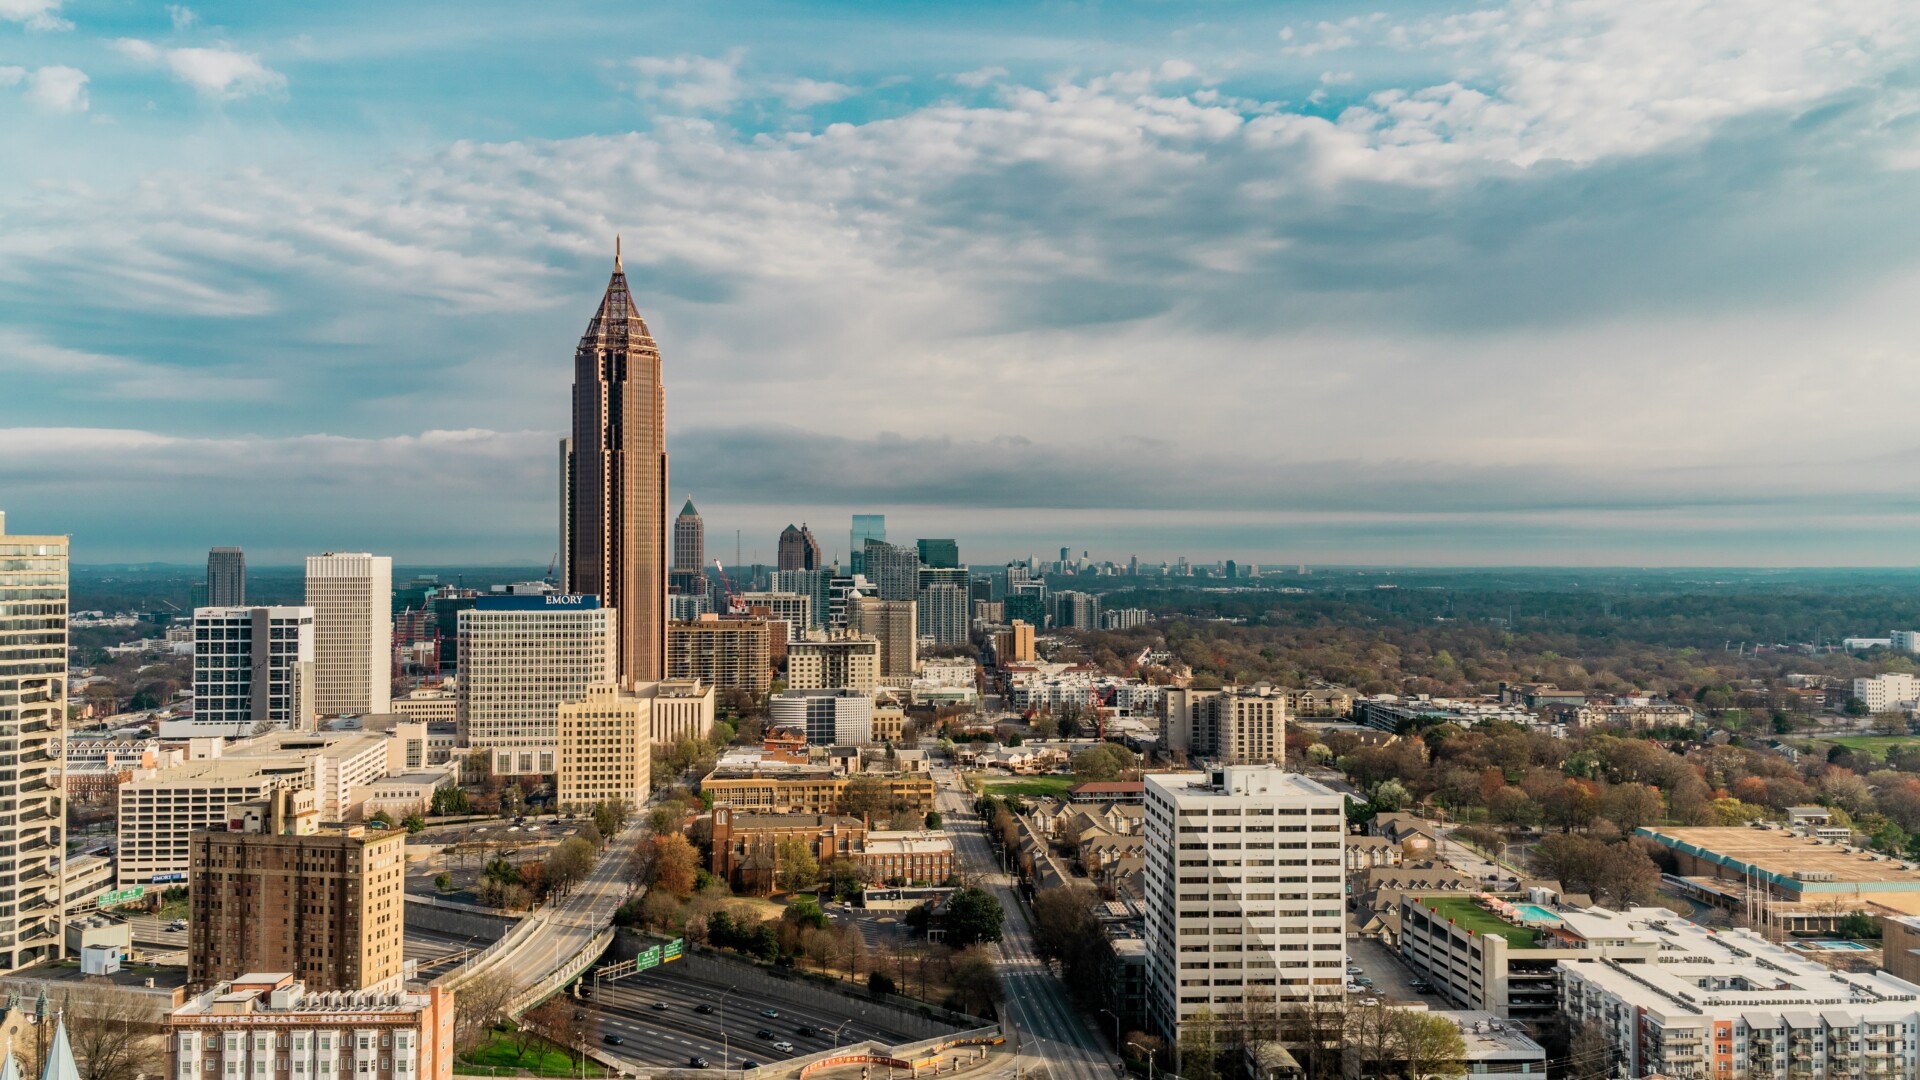 A view of the Atlanta Skyline